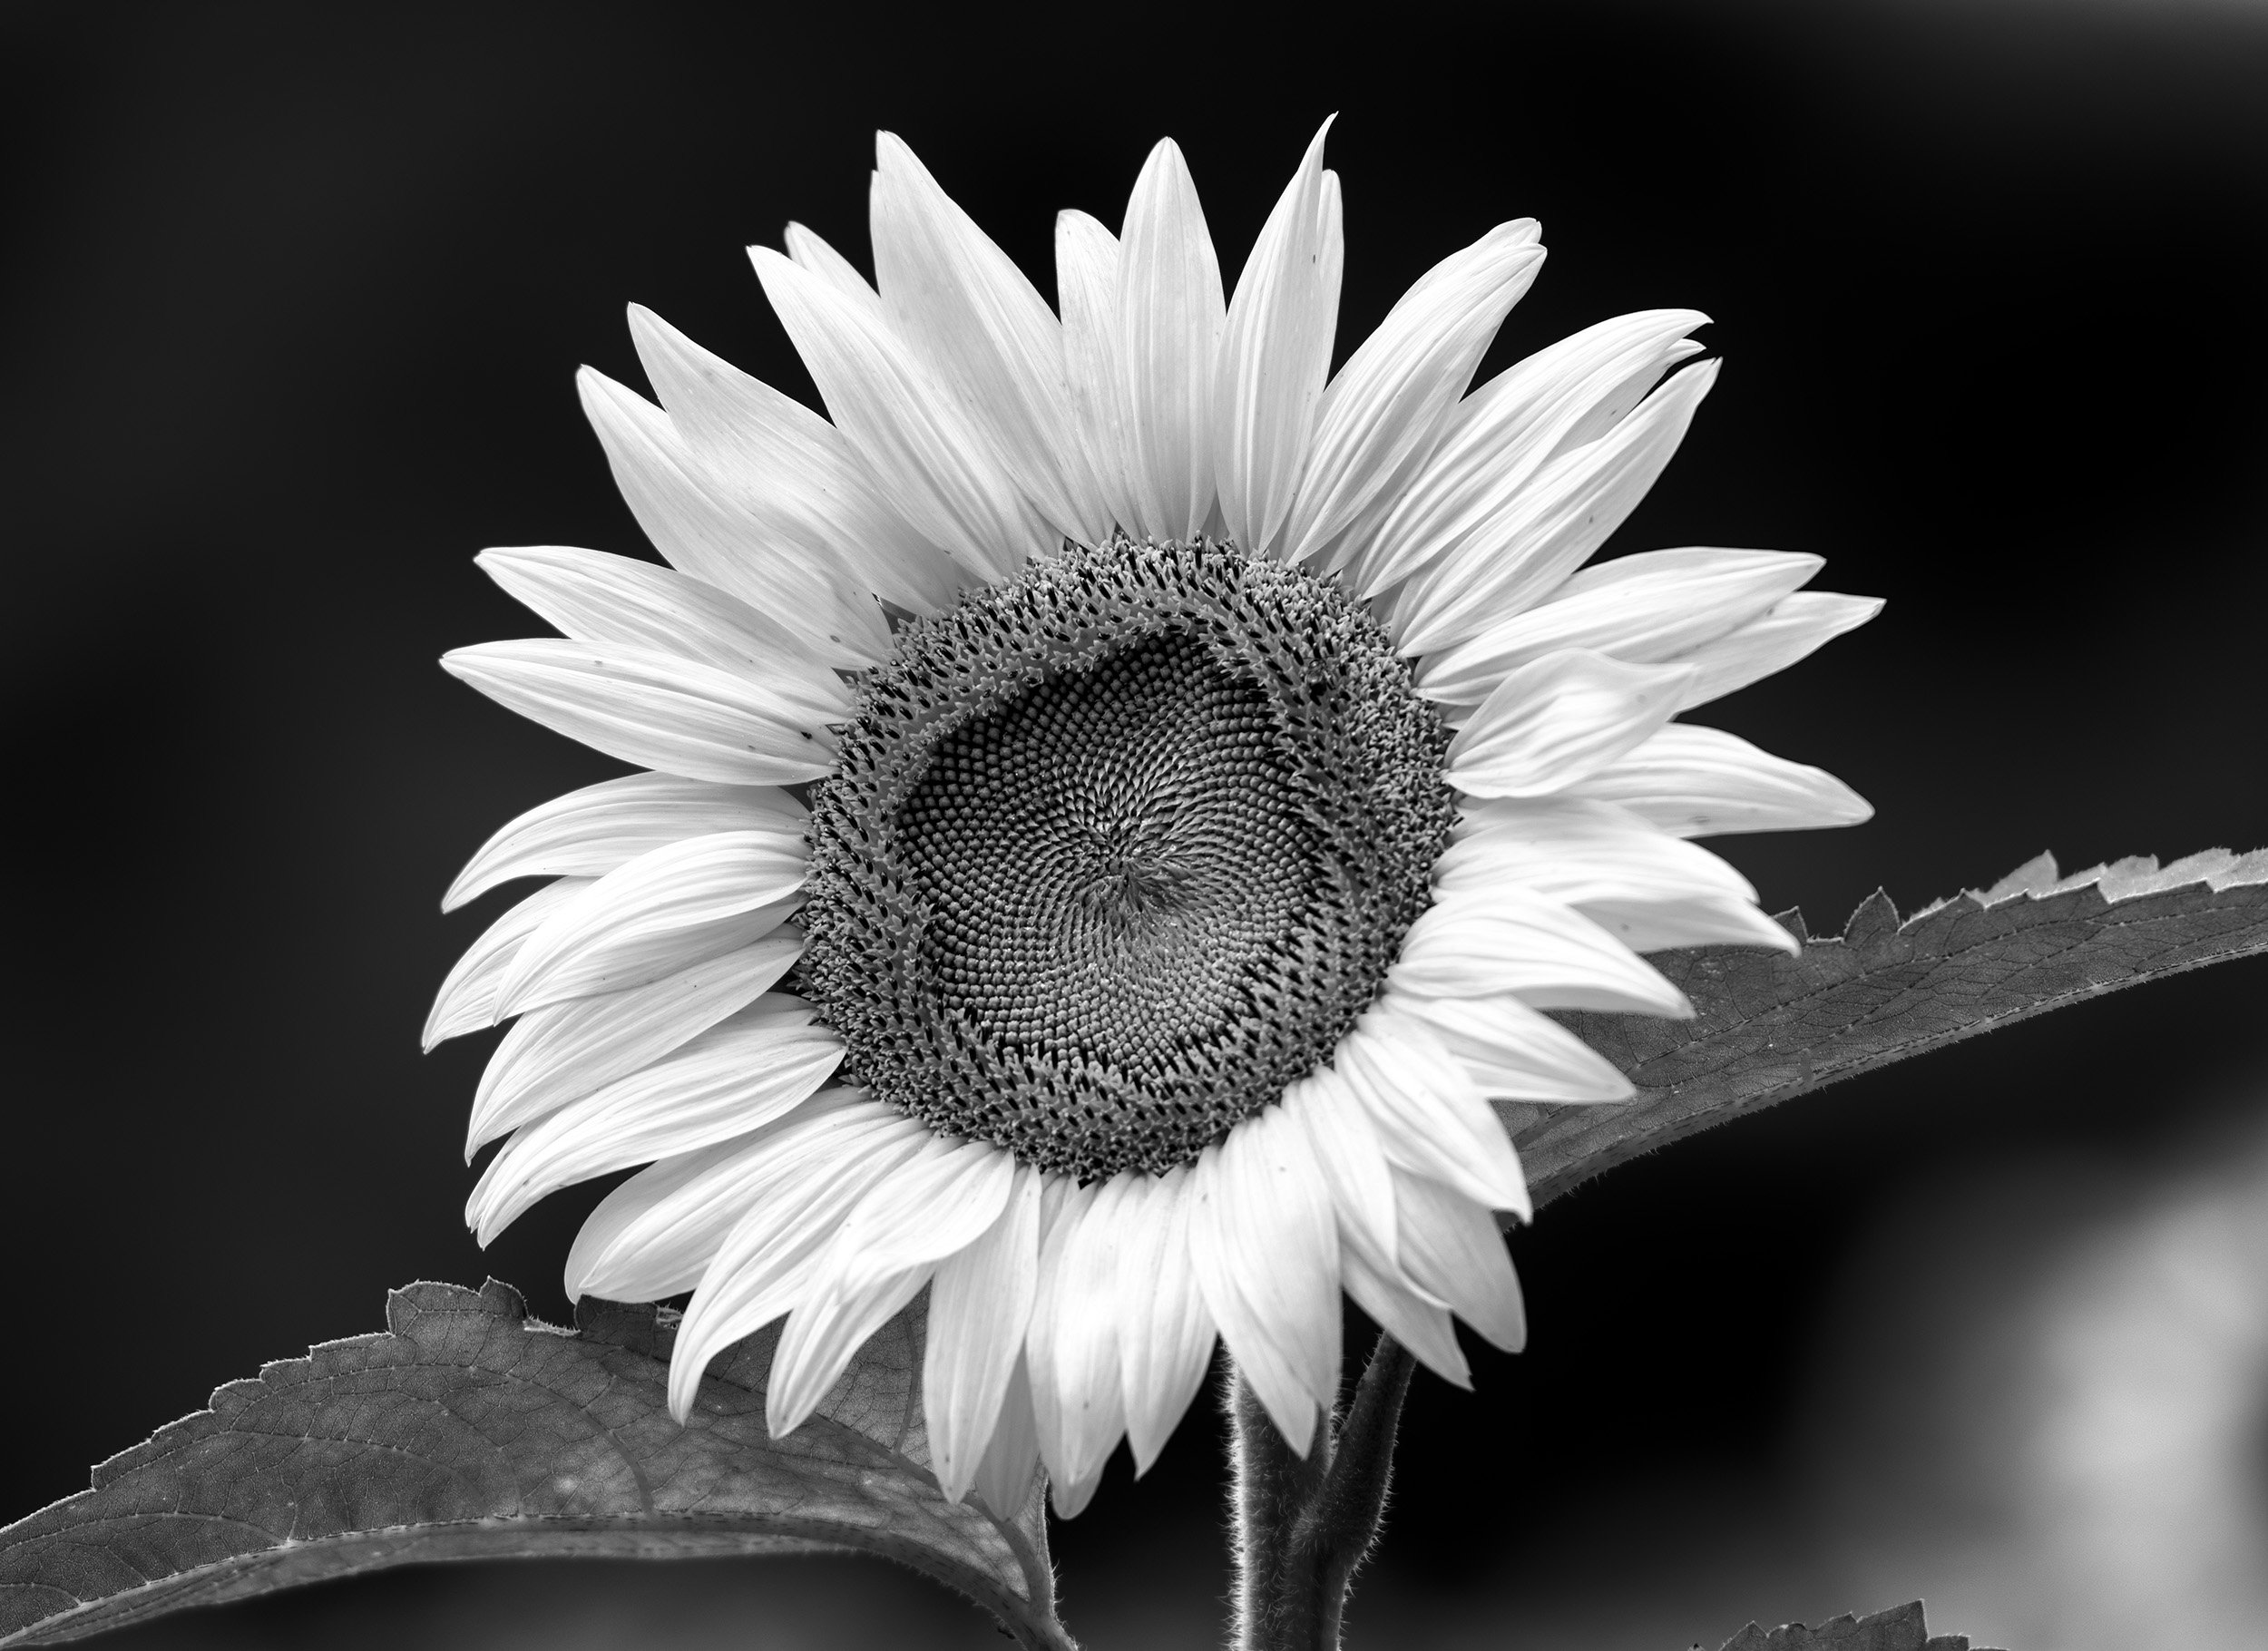 150710 sunflowers 65 as Smart Object-1 bw cr.jpg